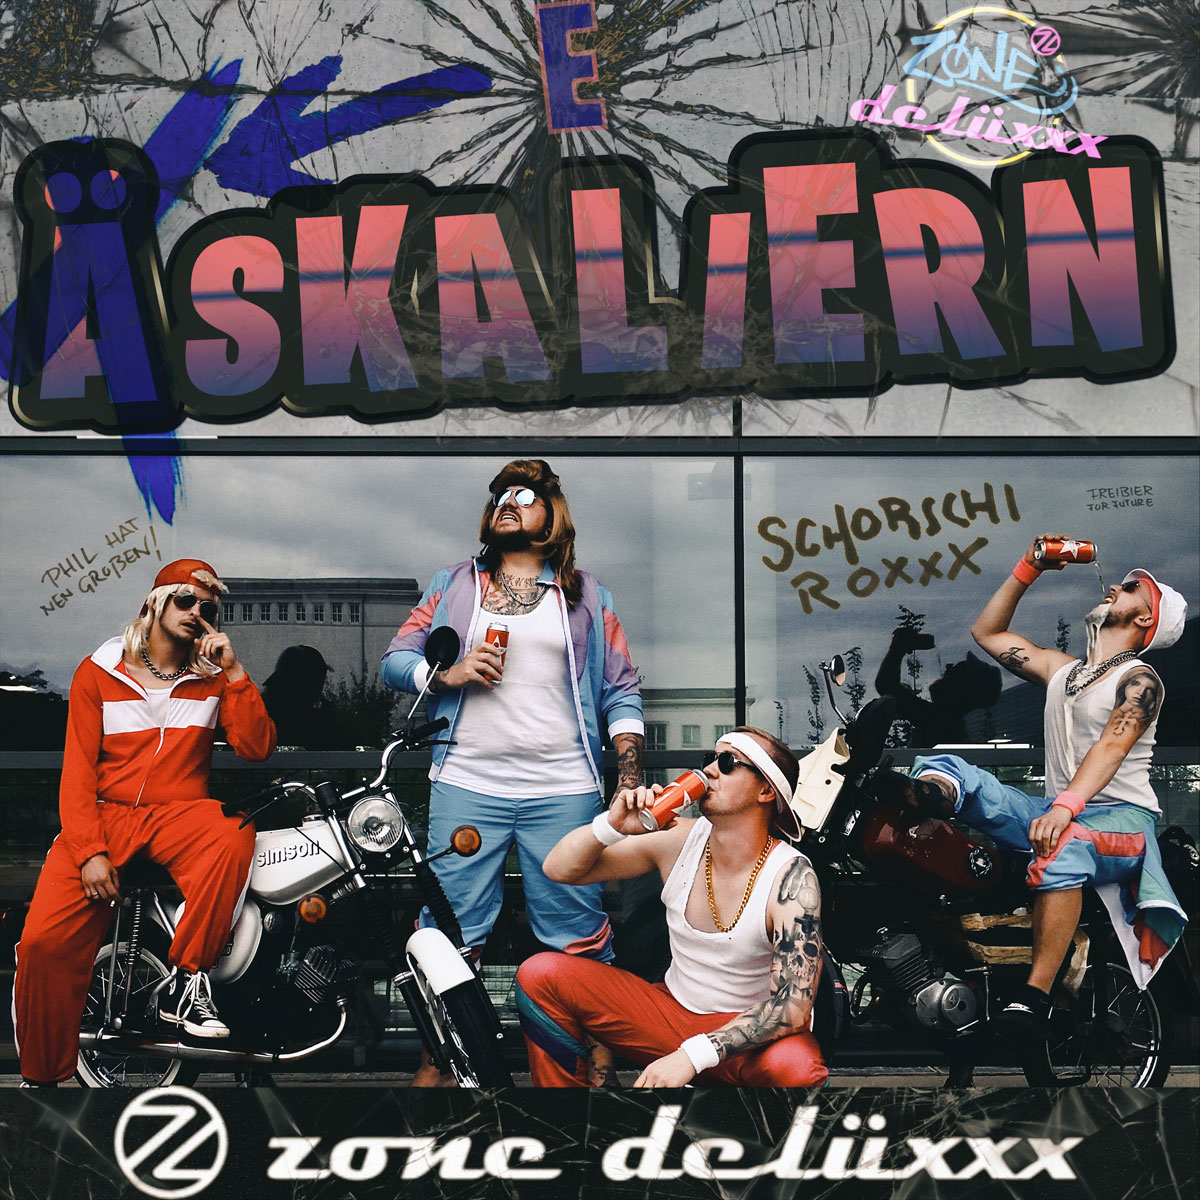 Zone Delüxxx - Äskaliern